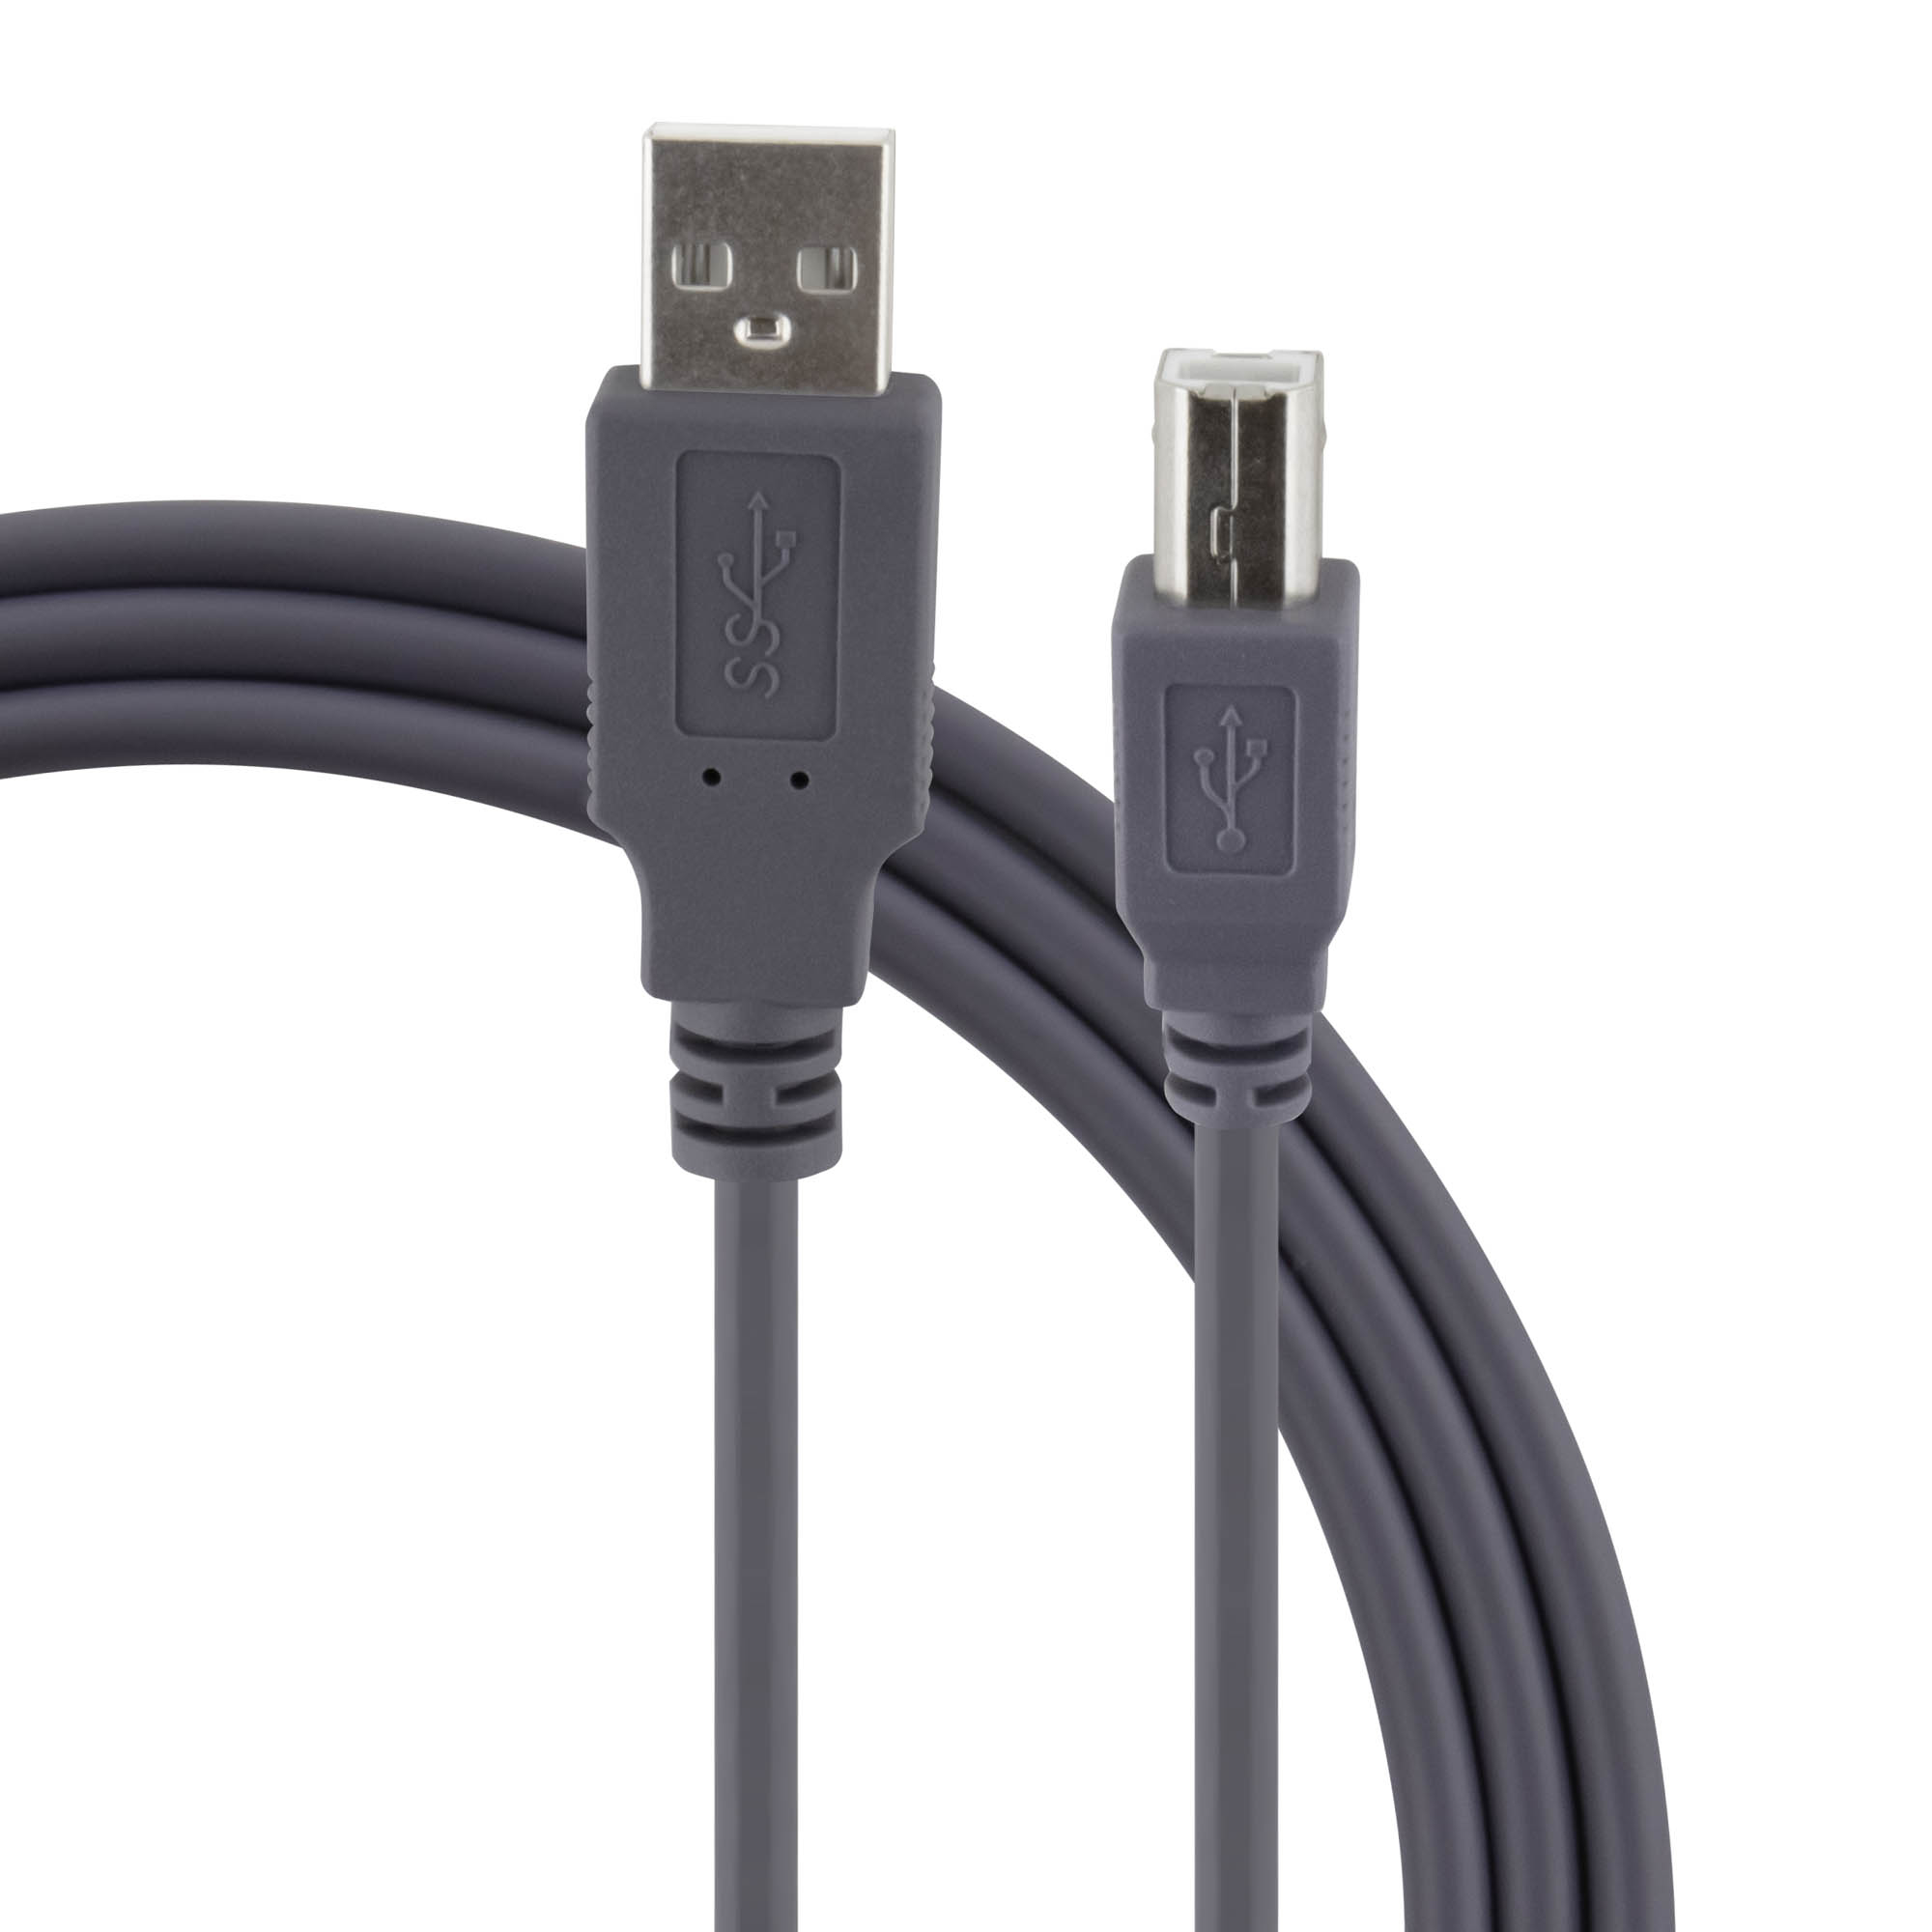 USB cable A plug - B plug 1.80m